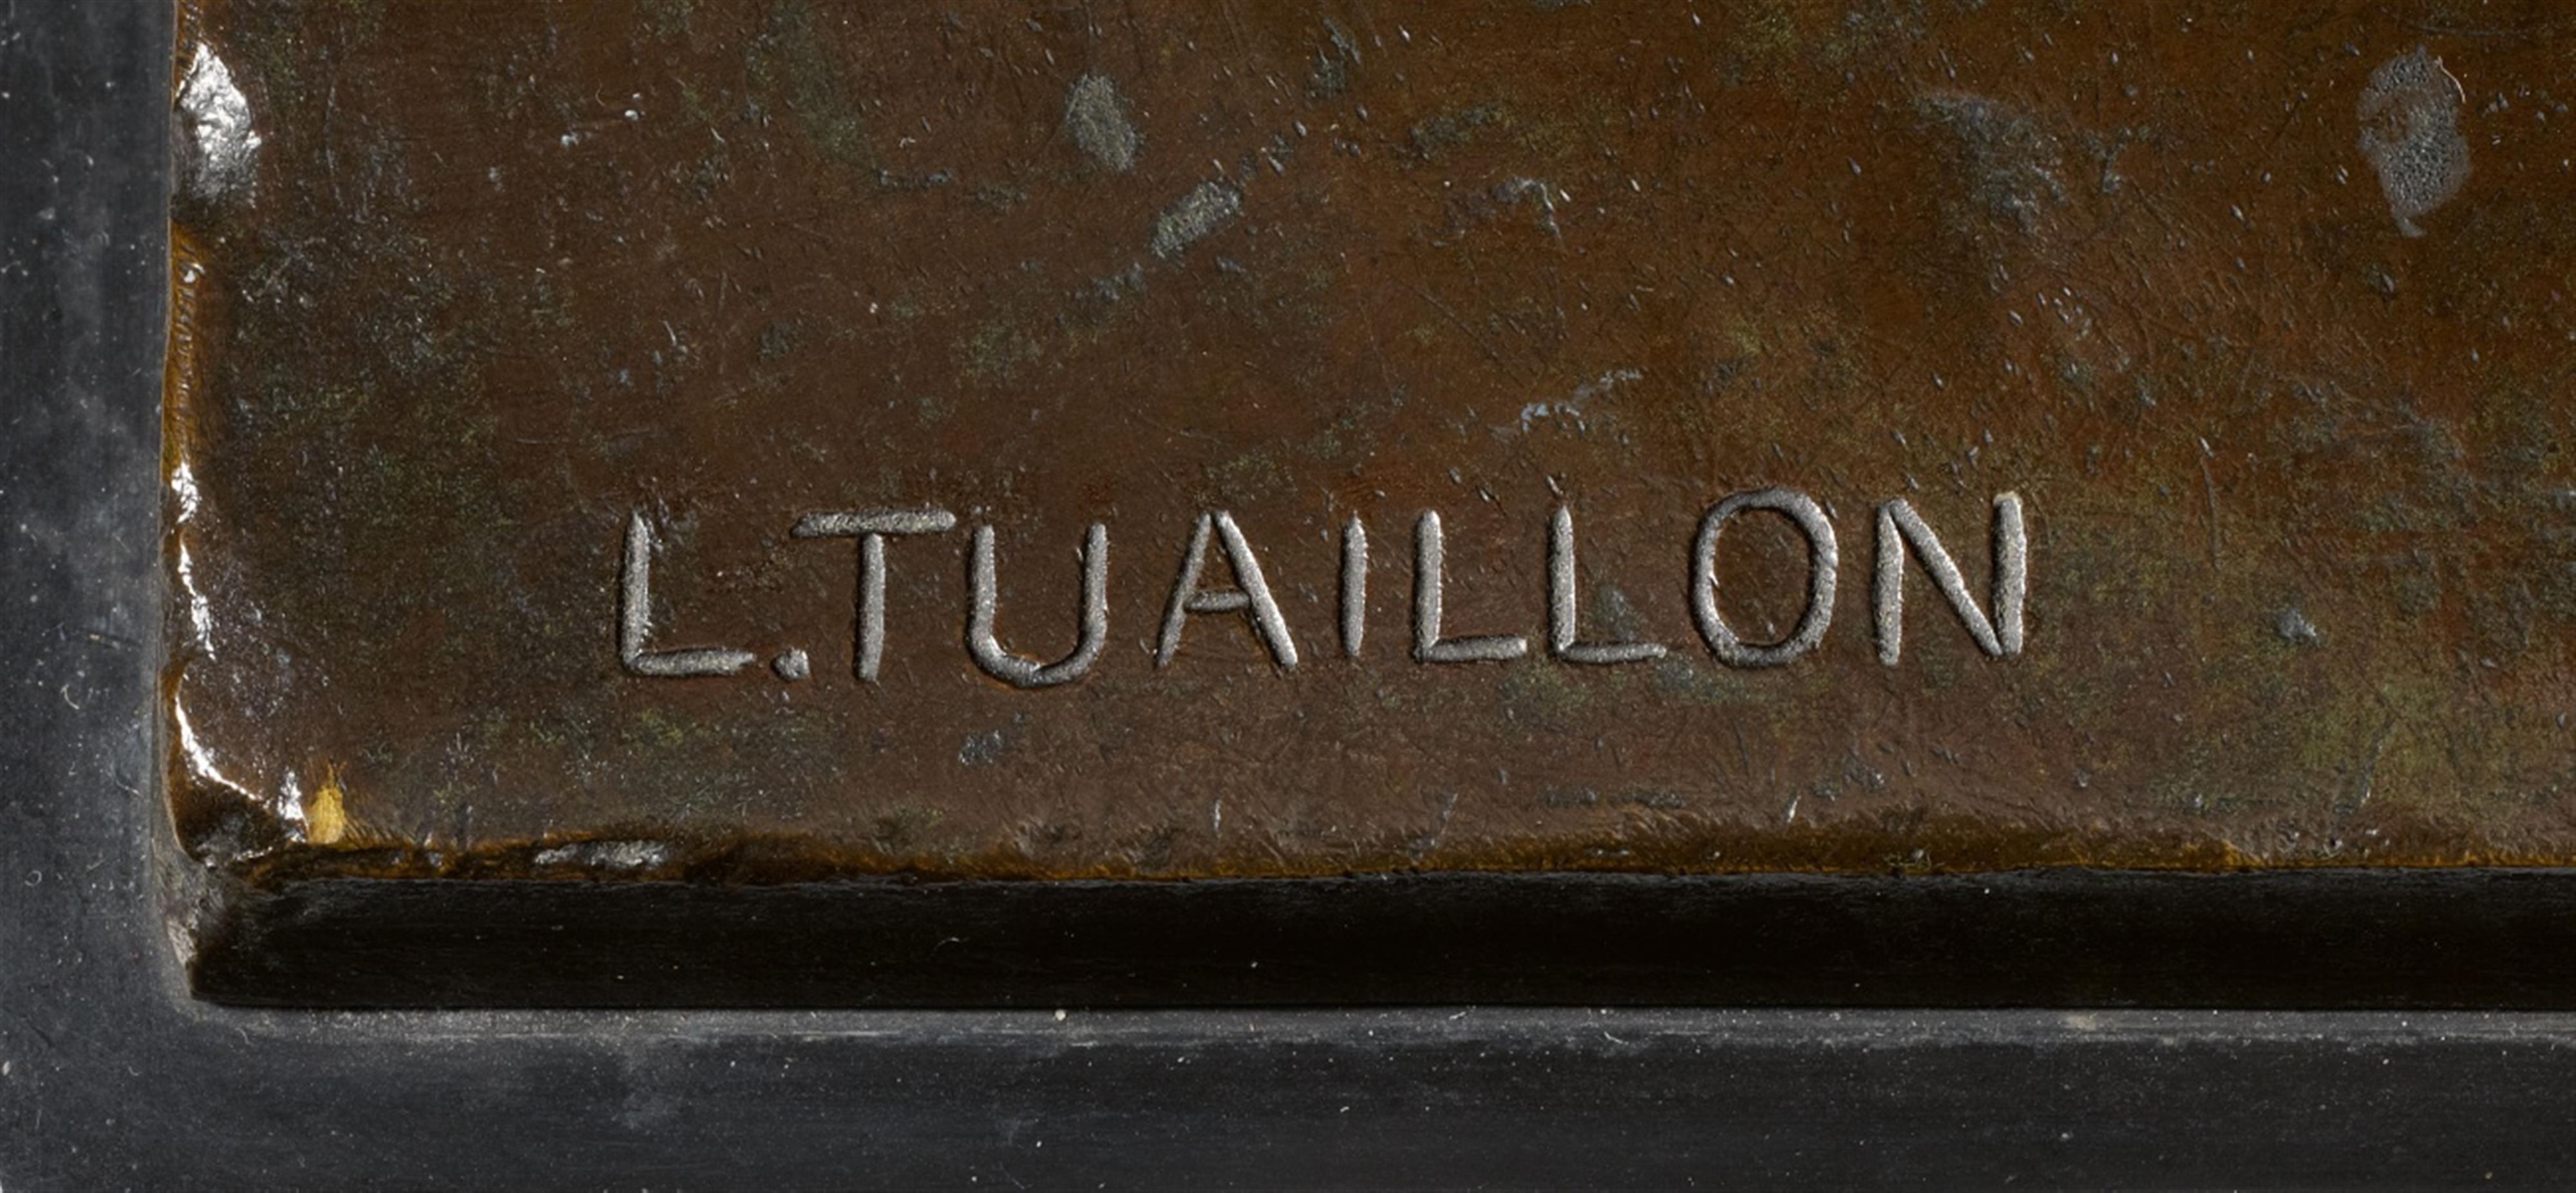 Louis Tuaillon - Ungarischer Stier - image-2